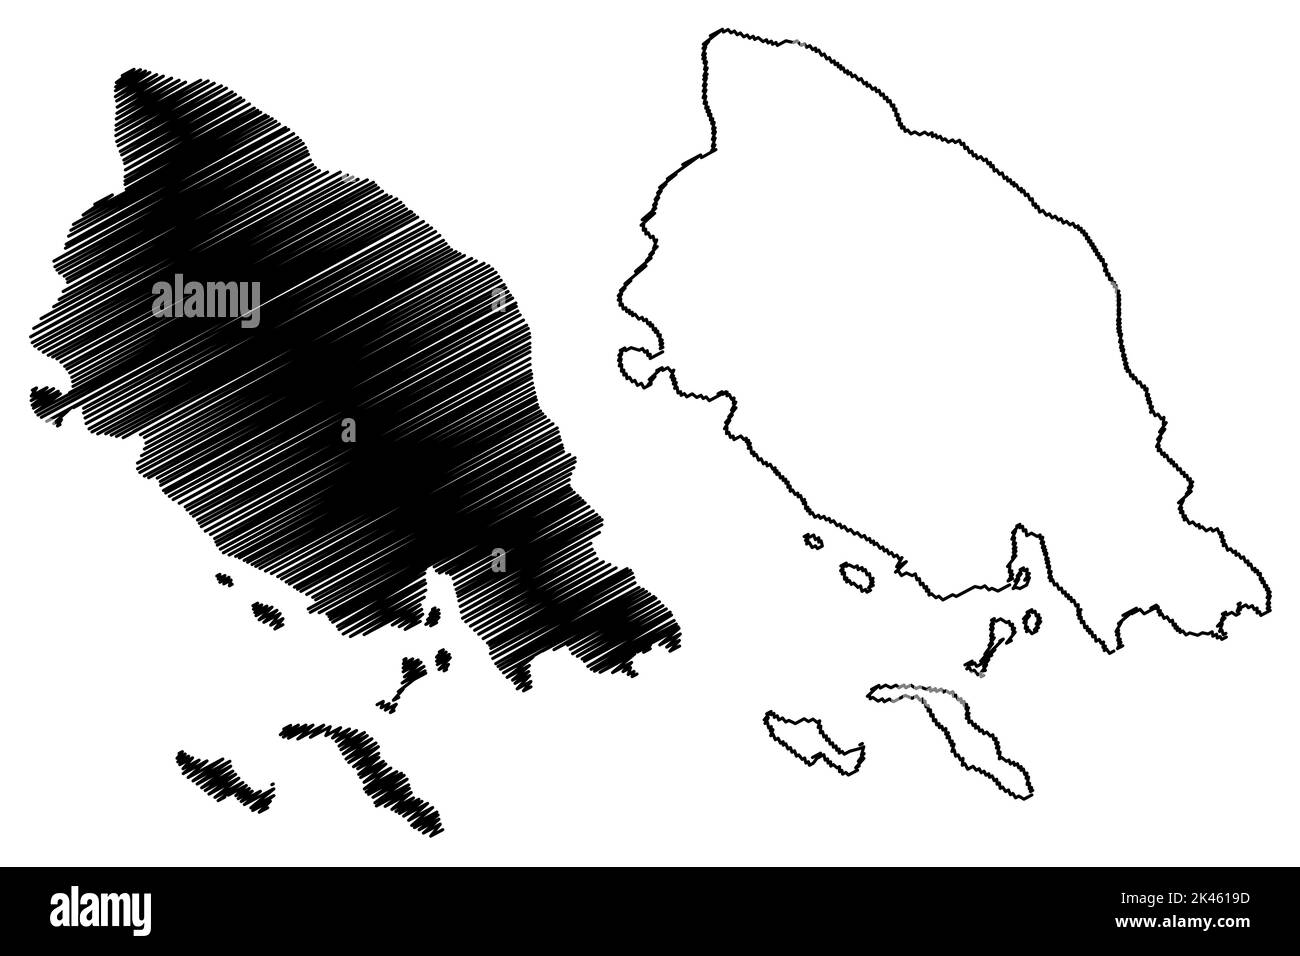 Mussau island (New Guinea, Pacific Ocean, Bismarck Archipelago, St Matthias Islands) map vector illustration, scribble sketch Mussau, Eloaua and Emana Stock Vector